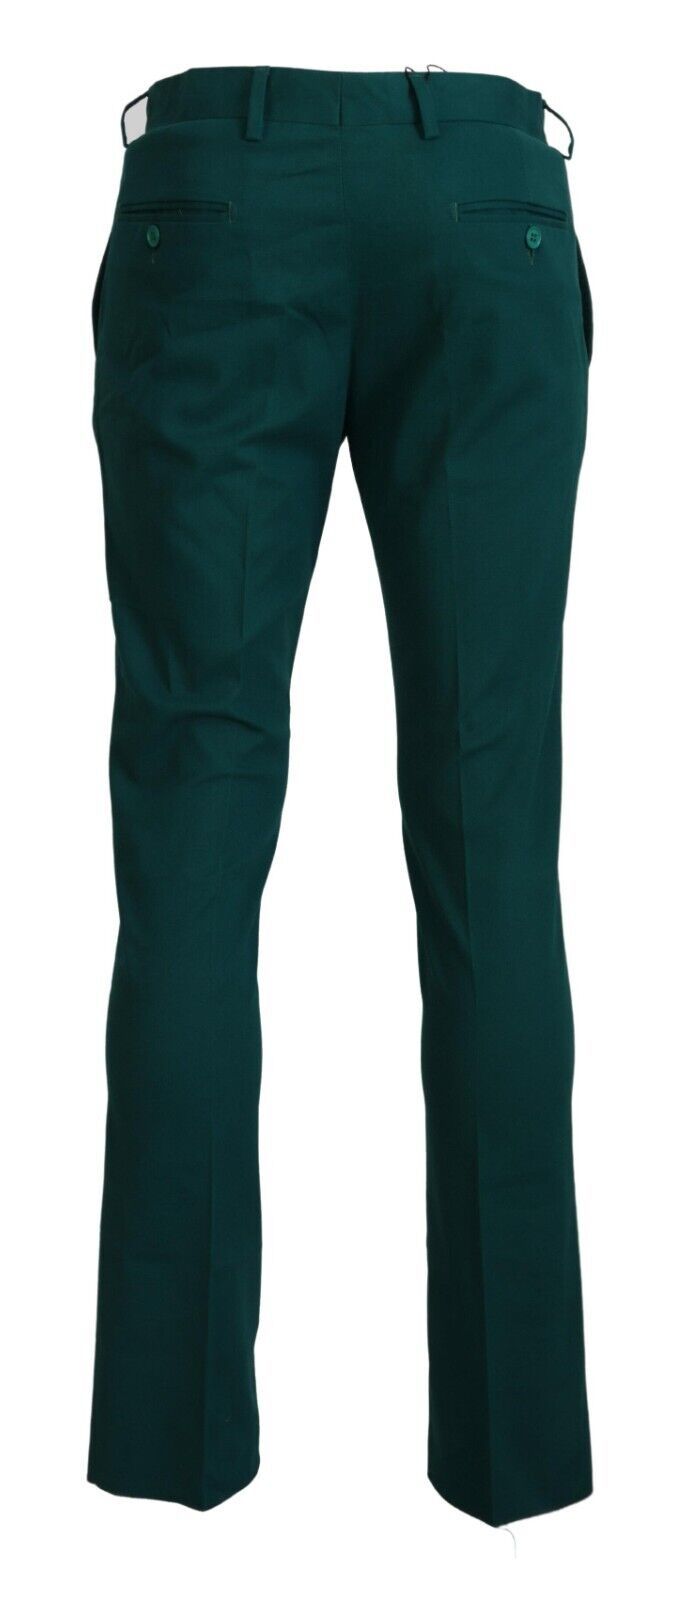 BENCIVENGA Elegantly Tailored Green Pure Cotton Pants